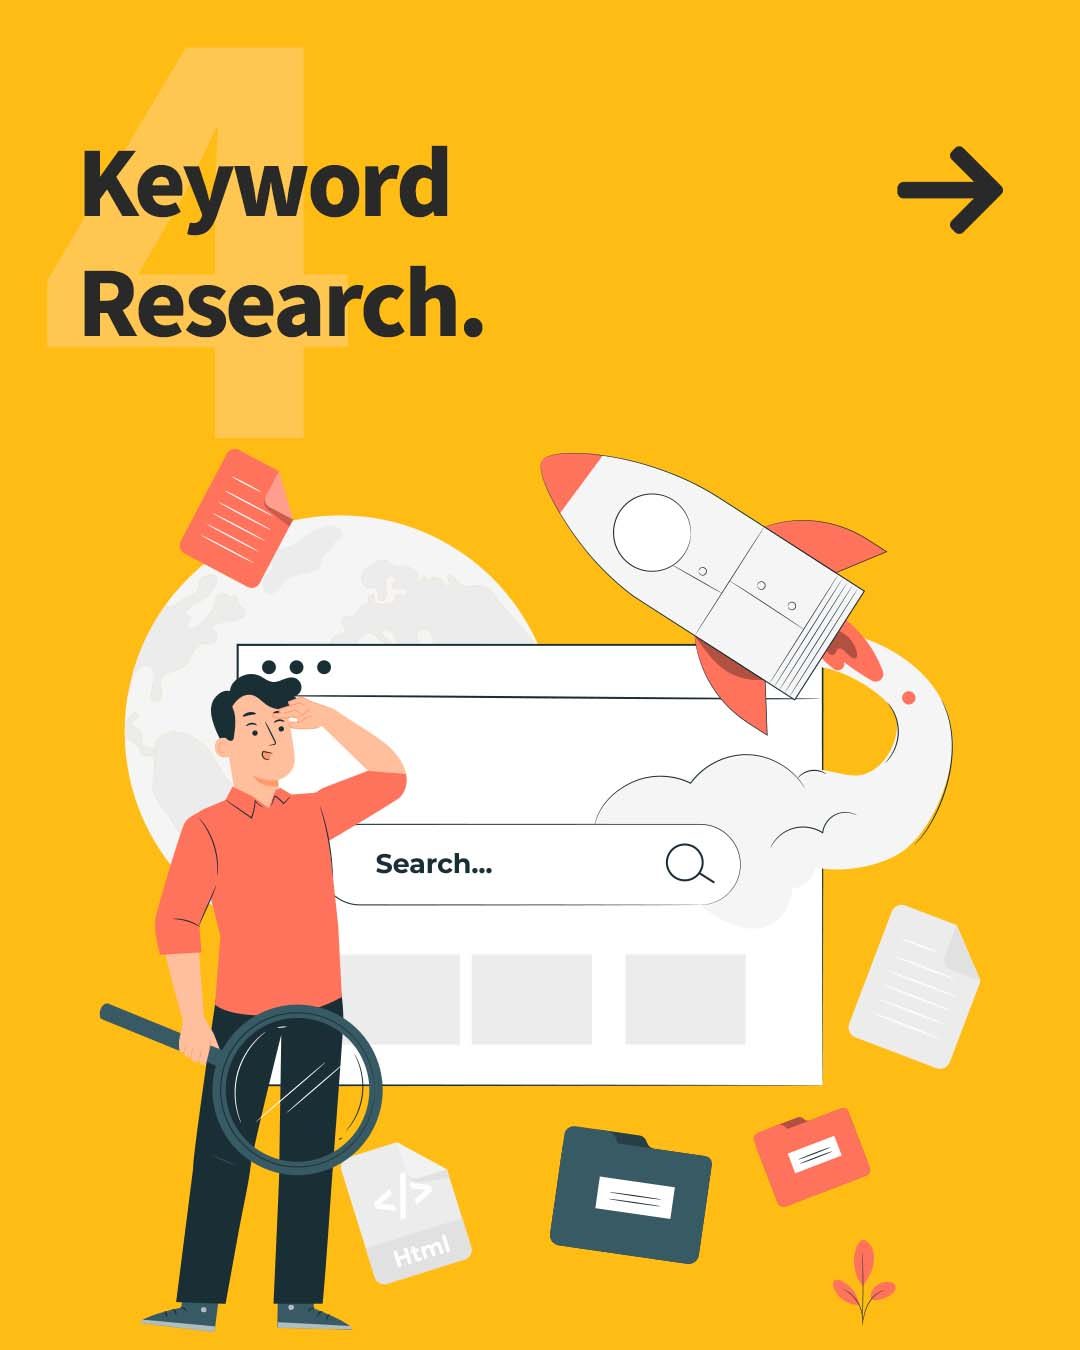 4. Keyword Research